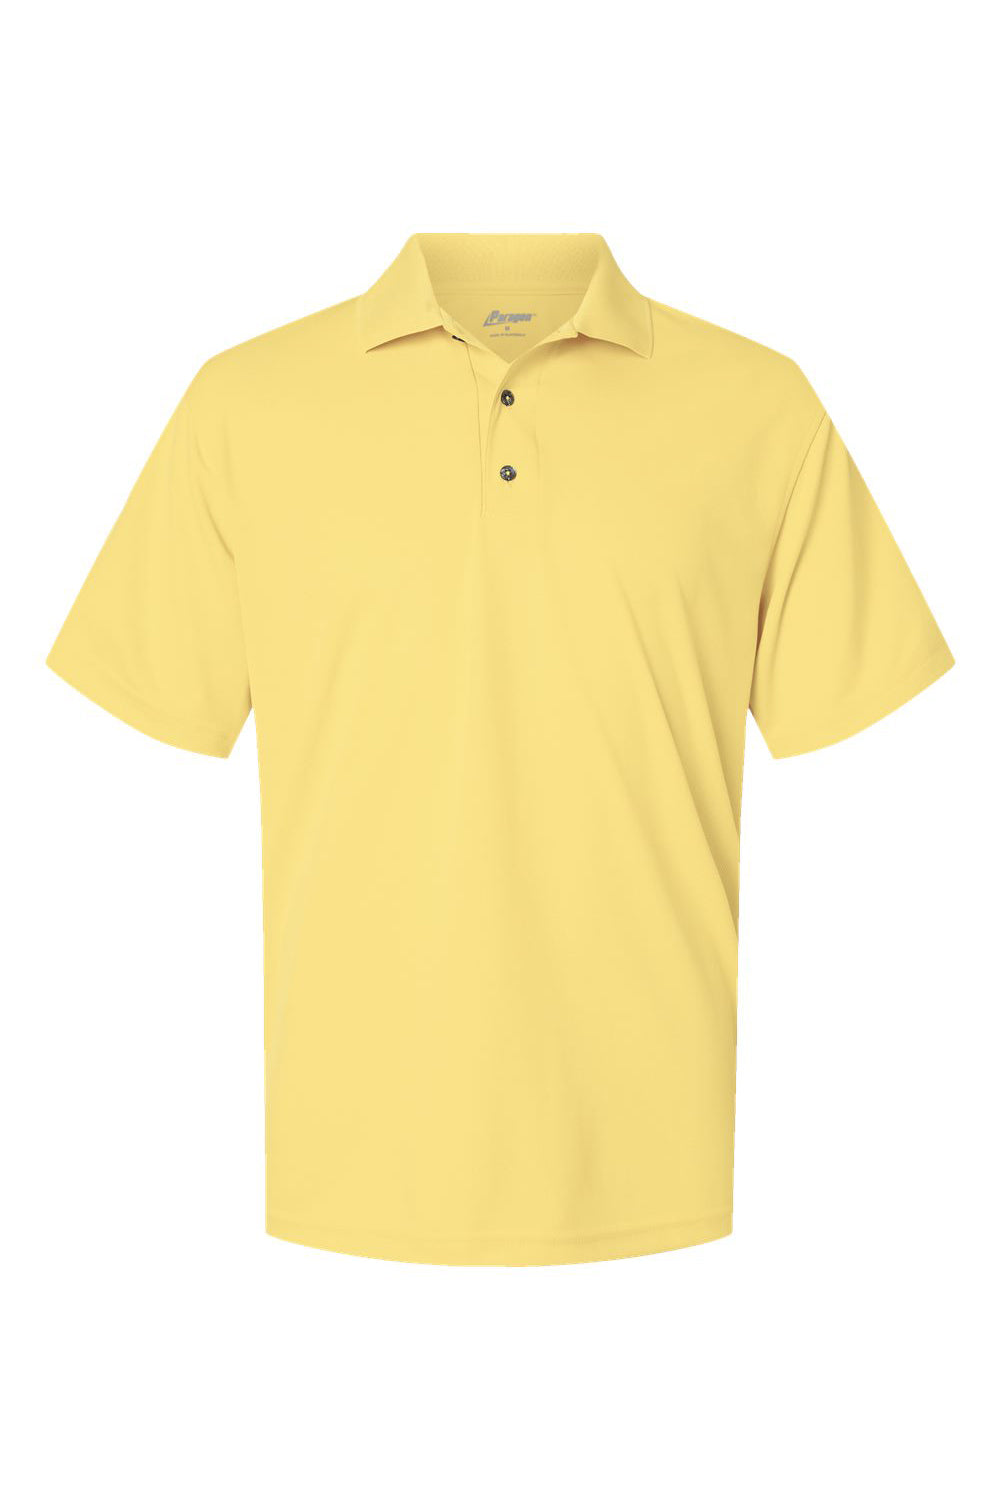 Paragon 100 Mens Saratoga Performance Mini Mesh Short Sleeve Polo Shirt Butter Yellow Flat Front